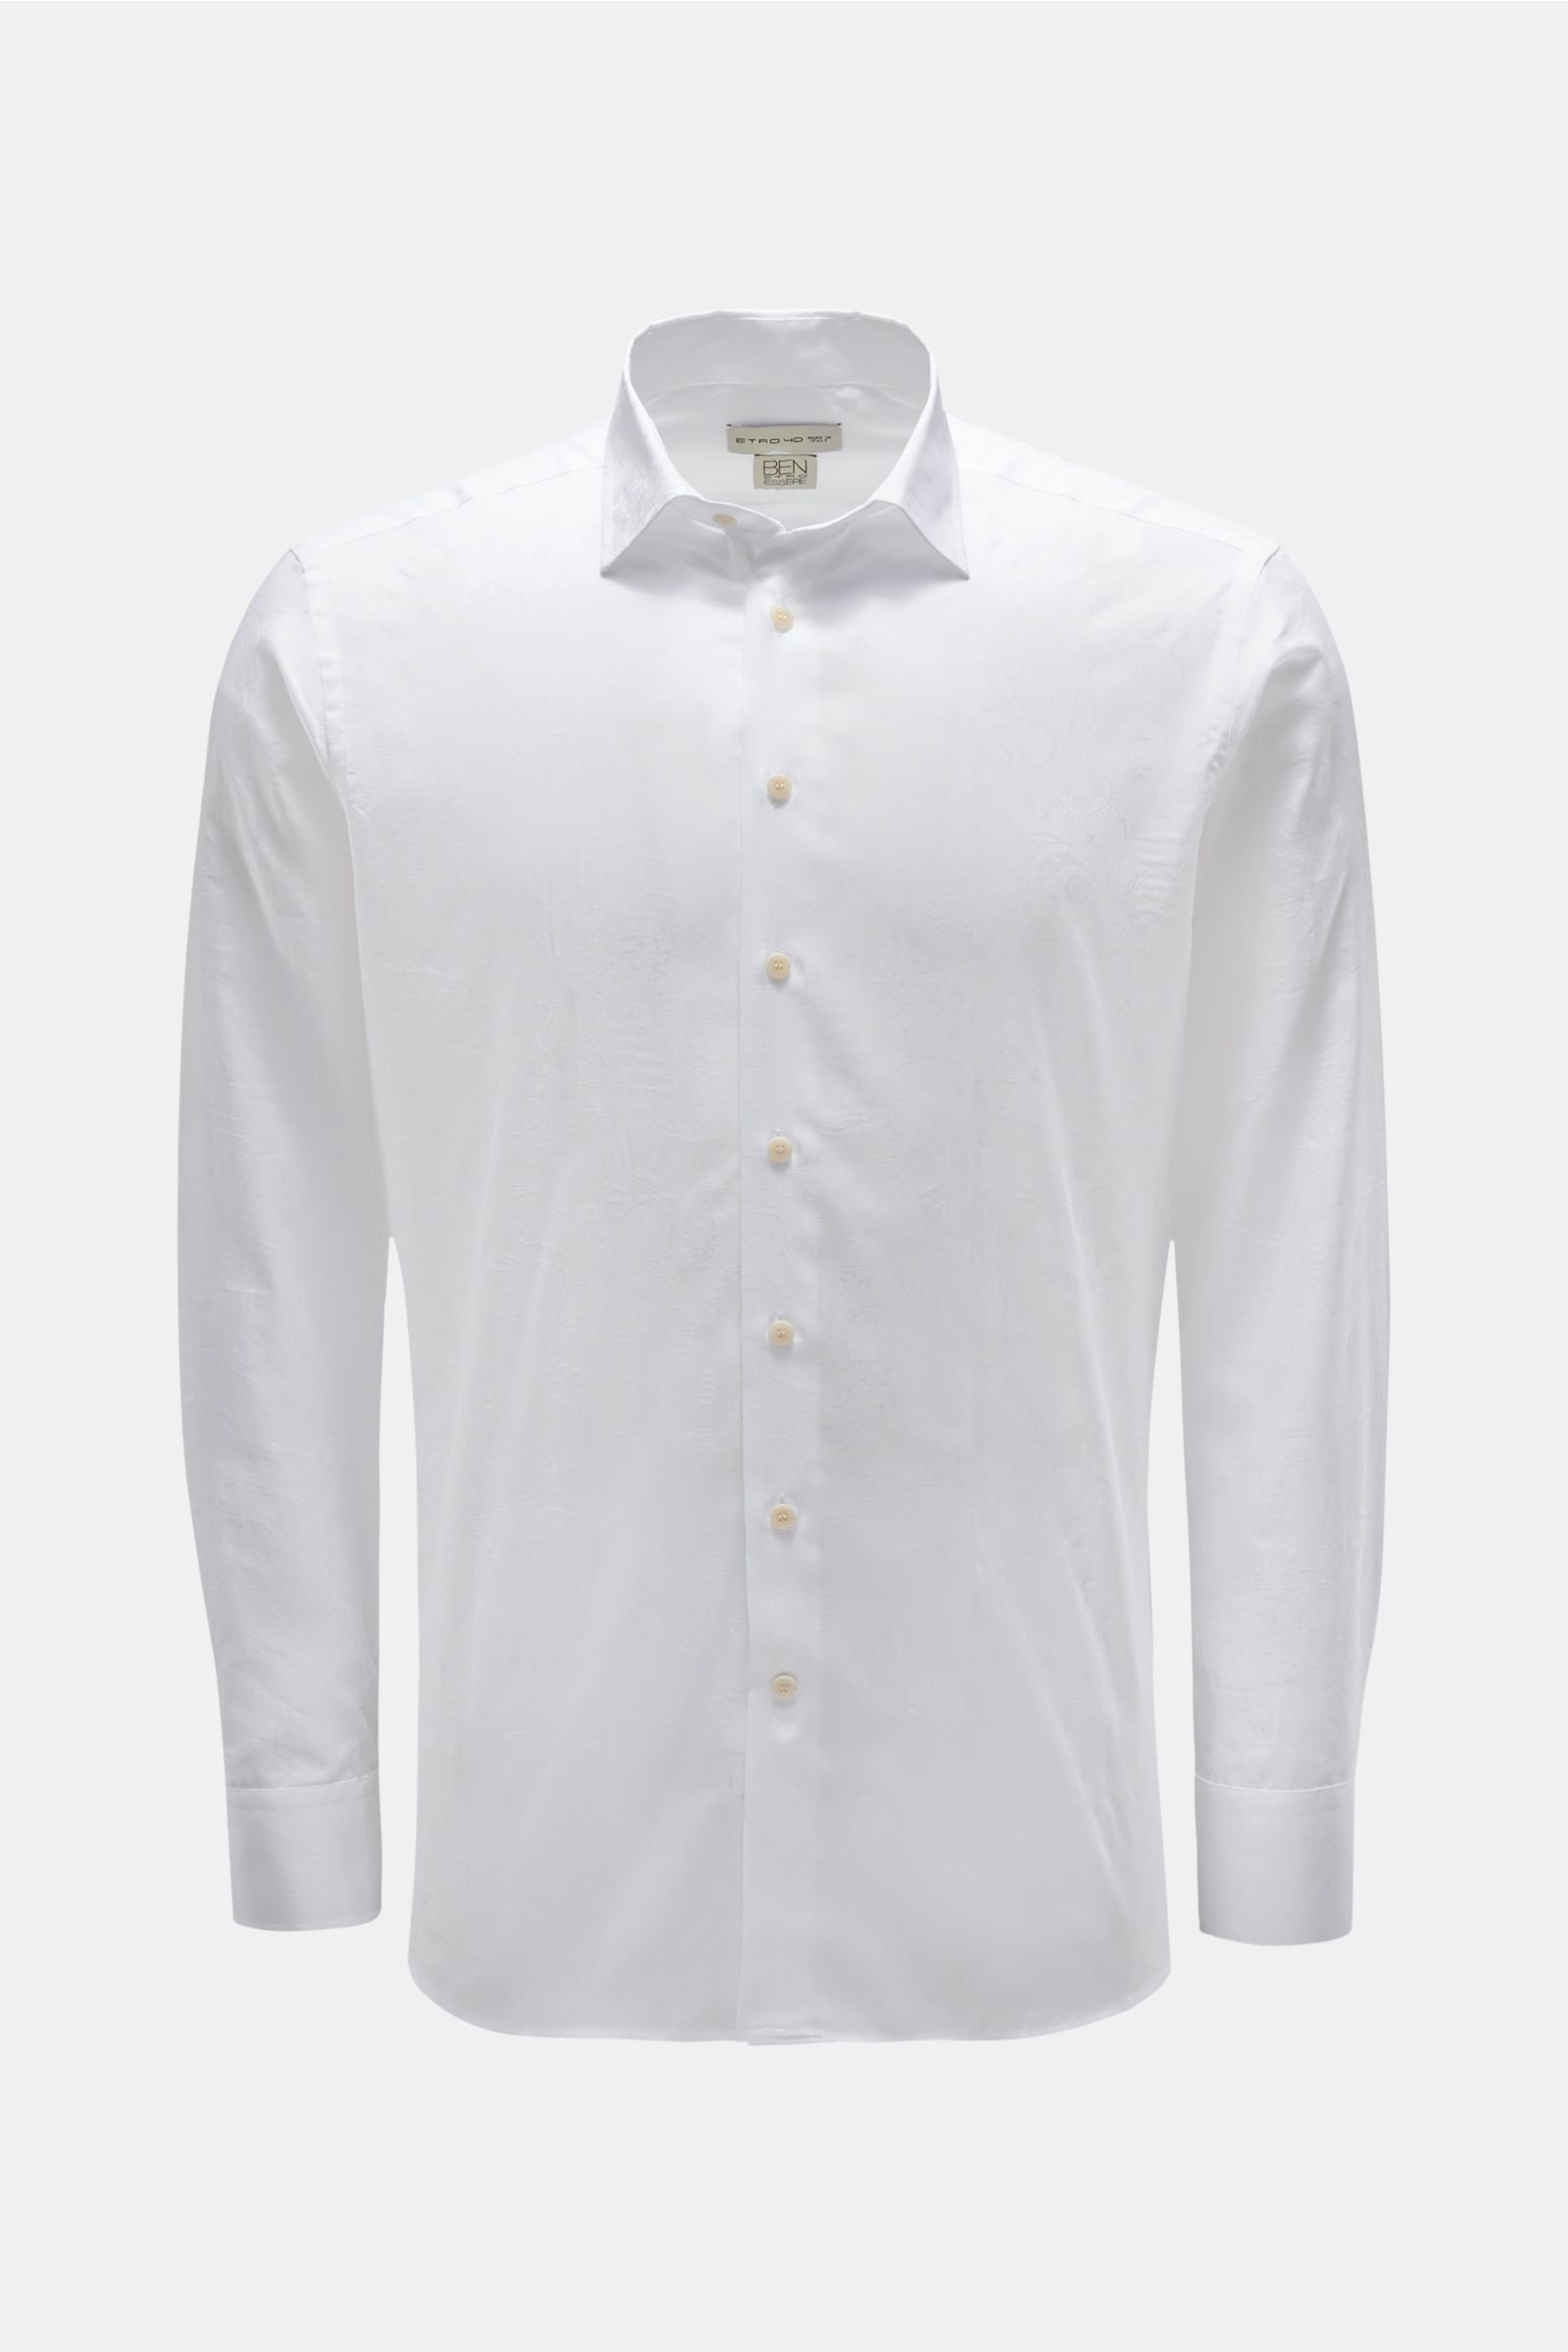 Jacquard shirt slim collar white patterned